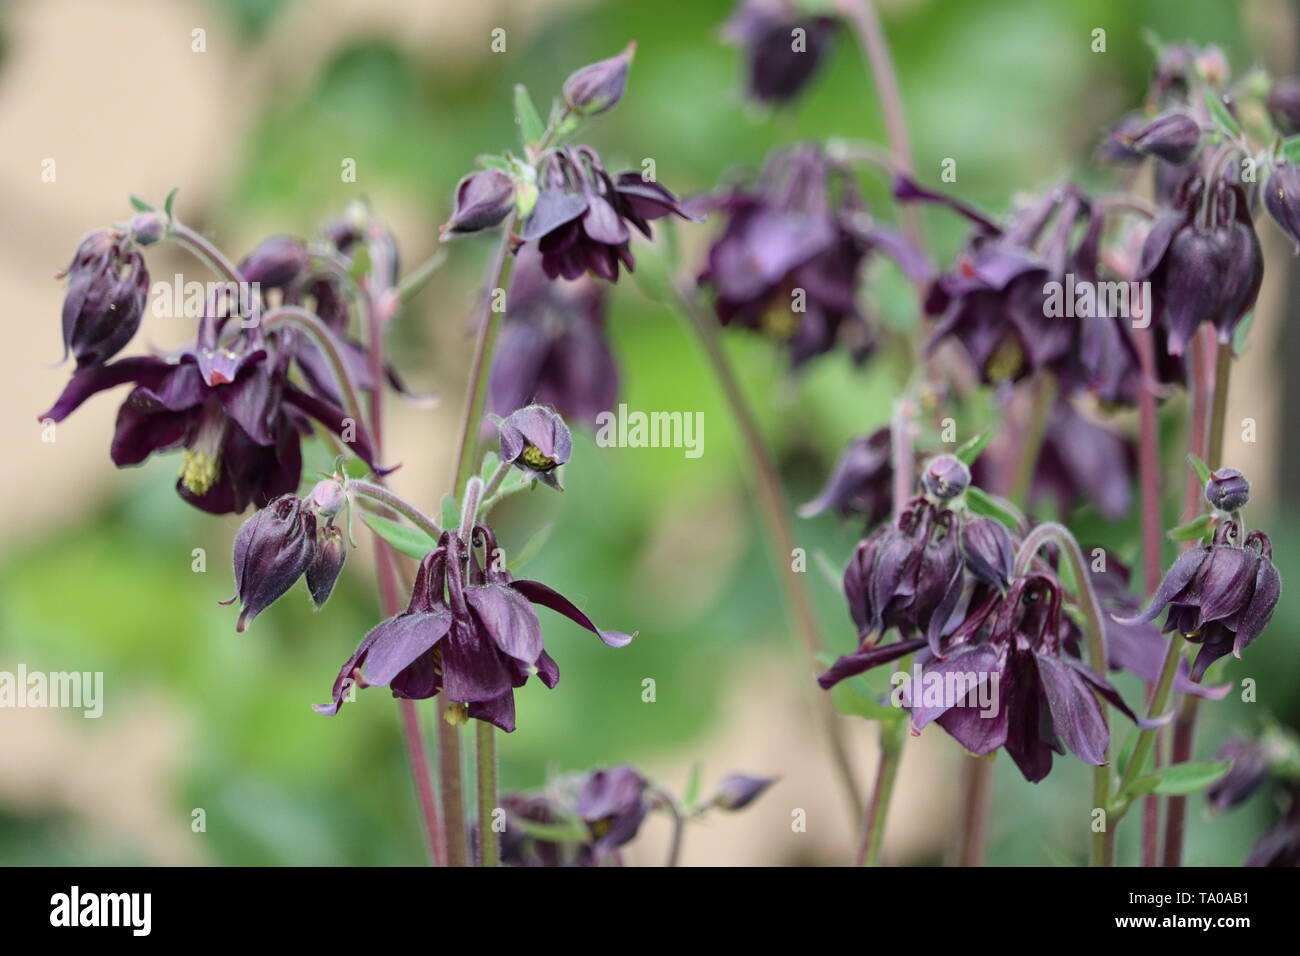 Purple bee-friendly Columbine flowers in the natural garden Stock Photo